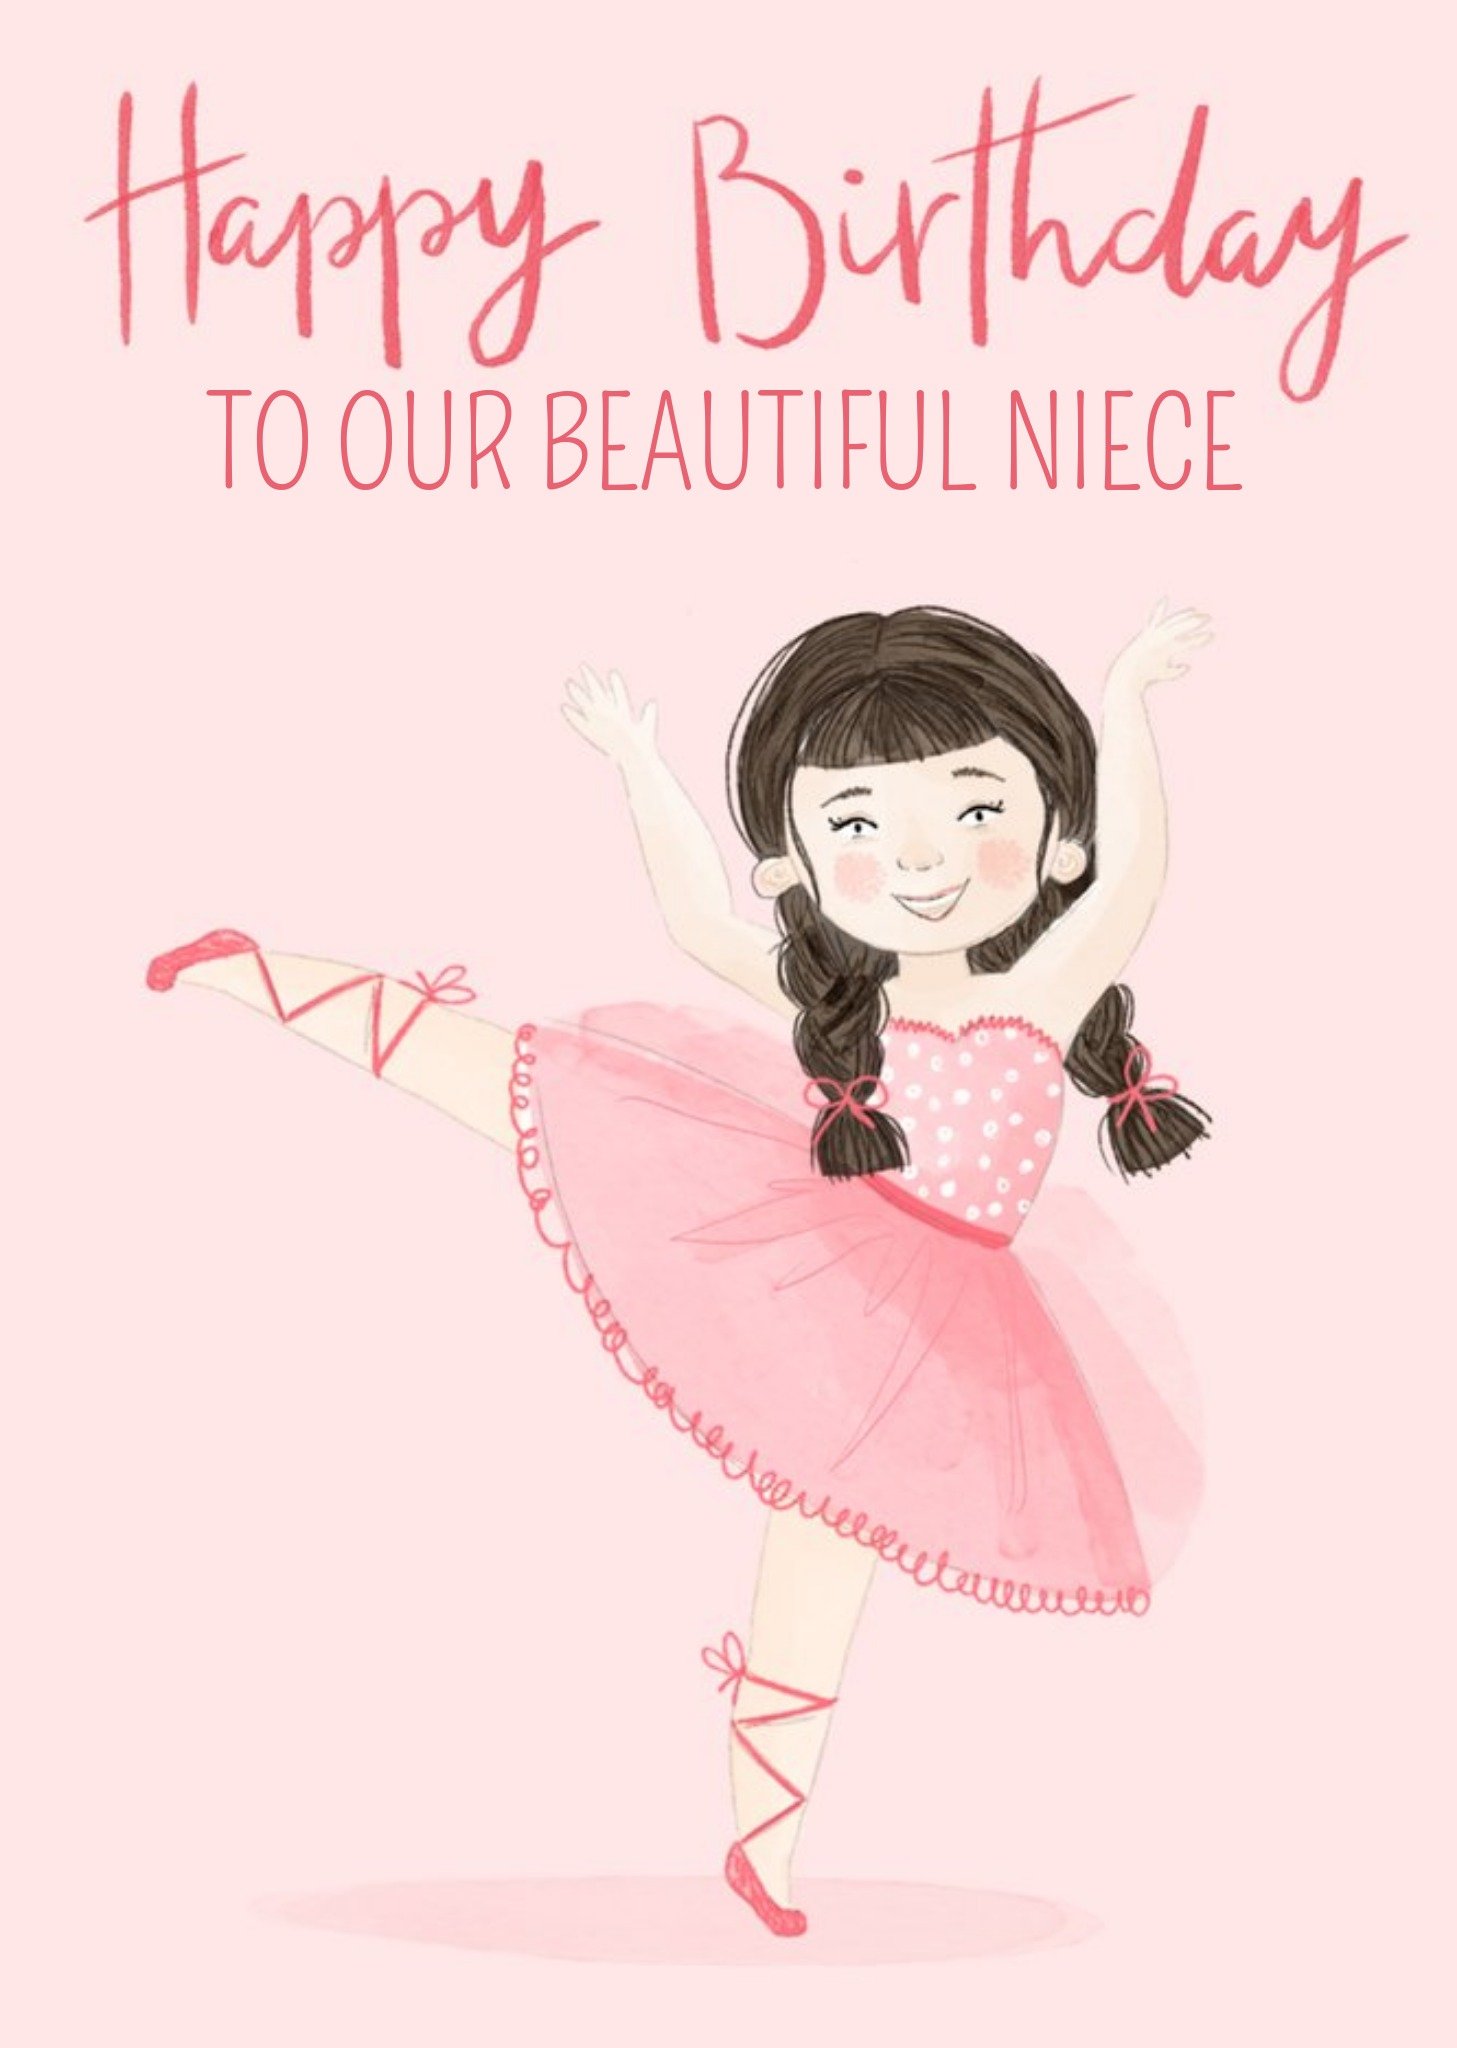 Making Meadows Okey Dokey Design Cute Ballerina Illustration Beautiful Niece Birthday Card, Large